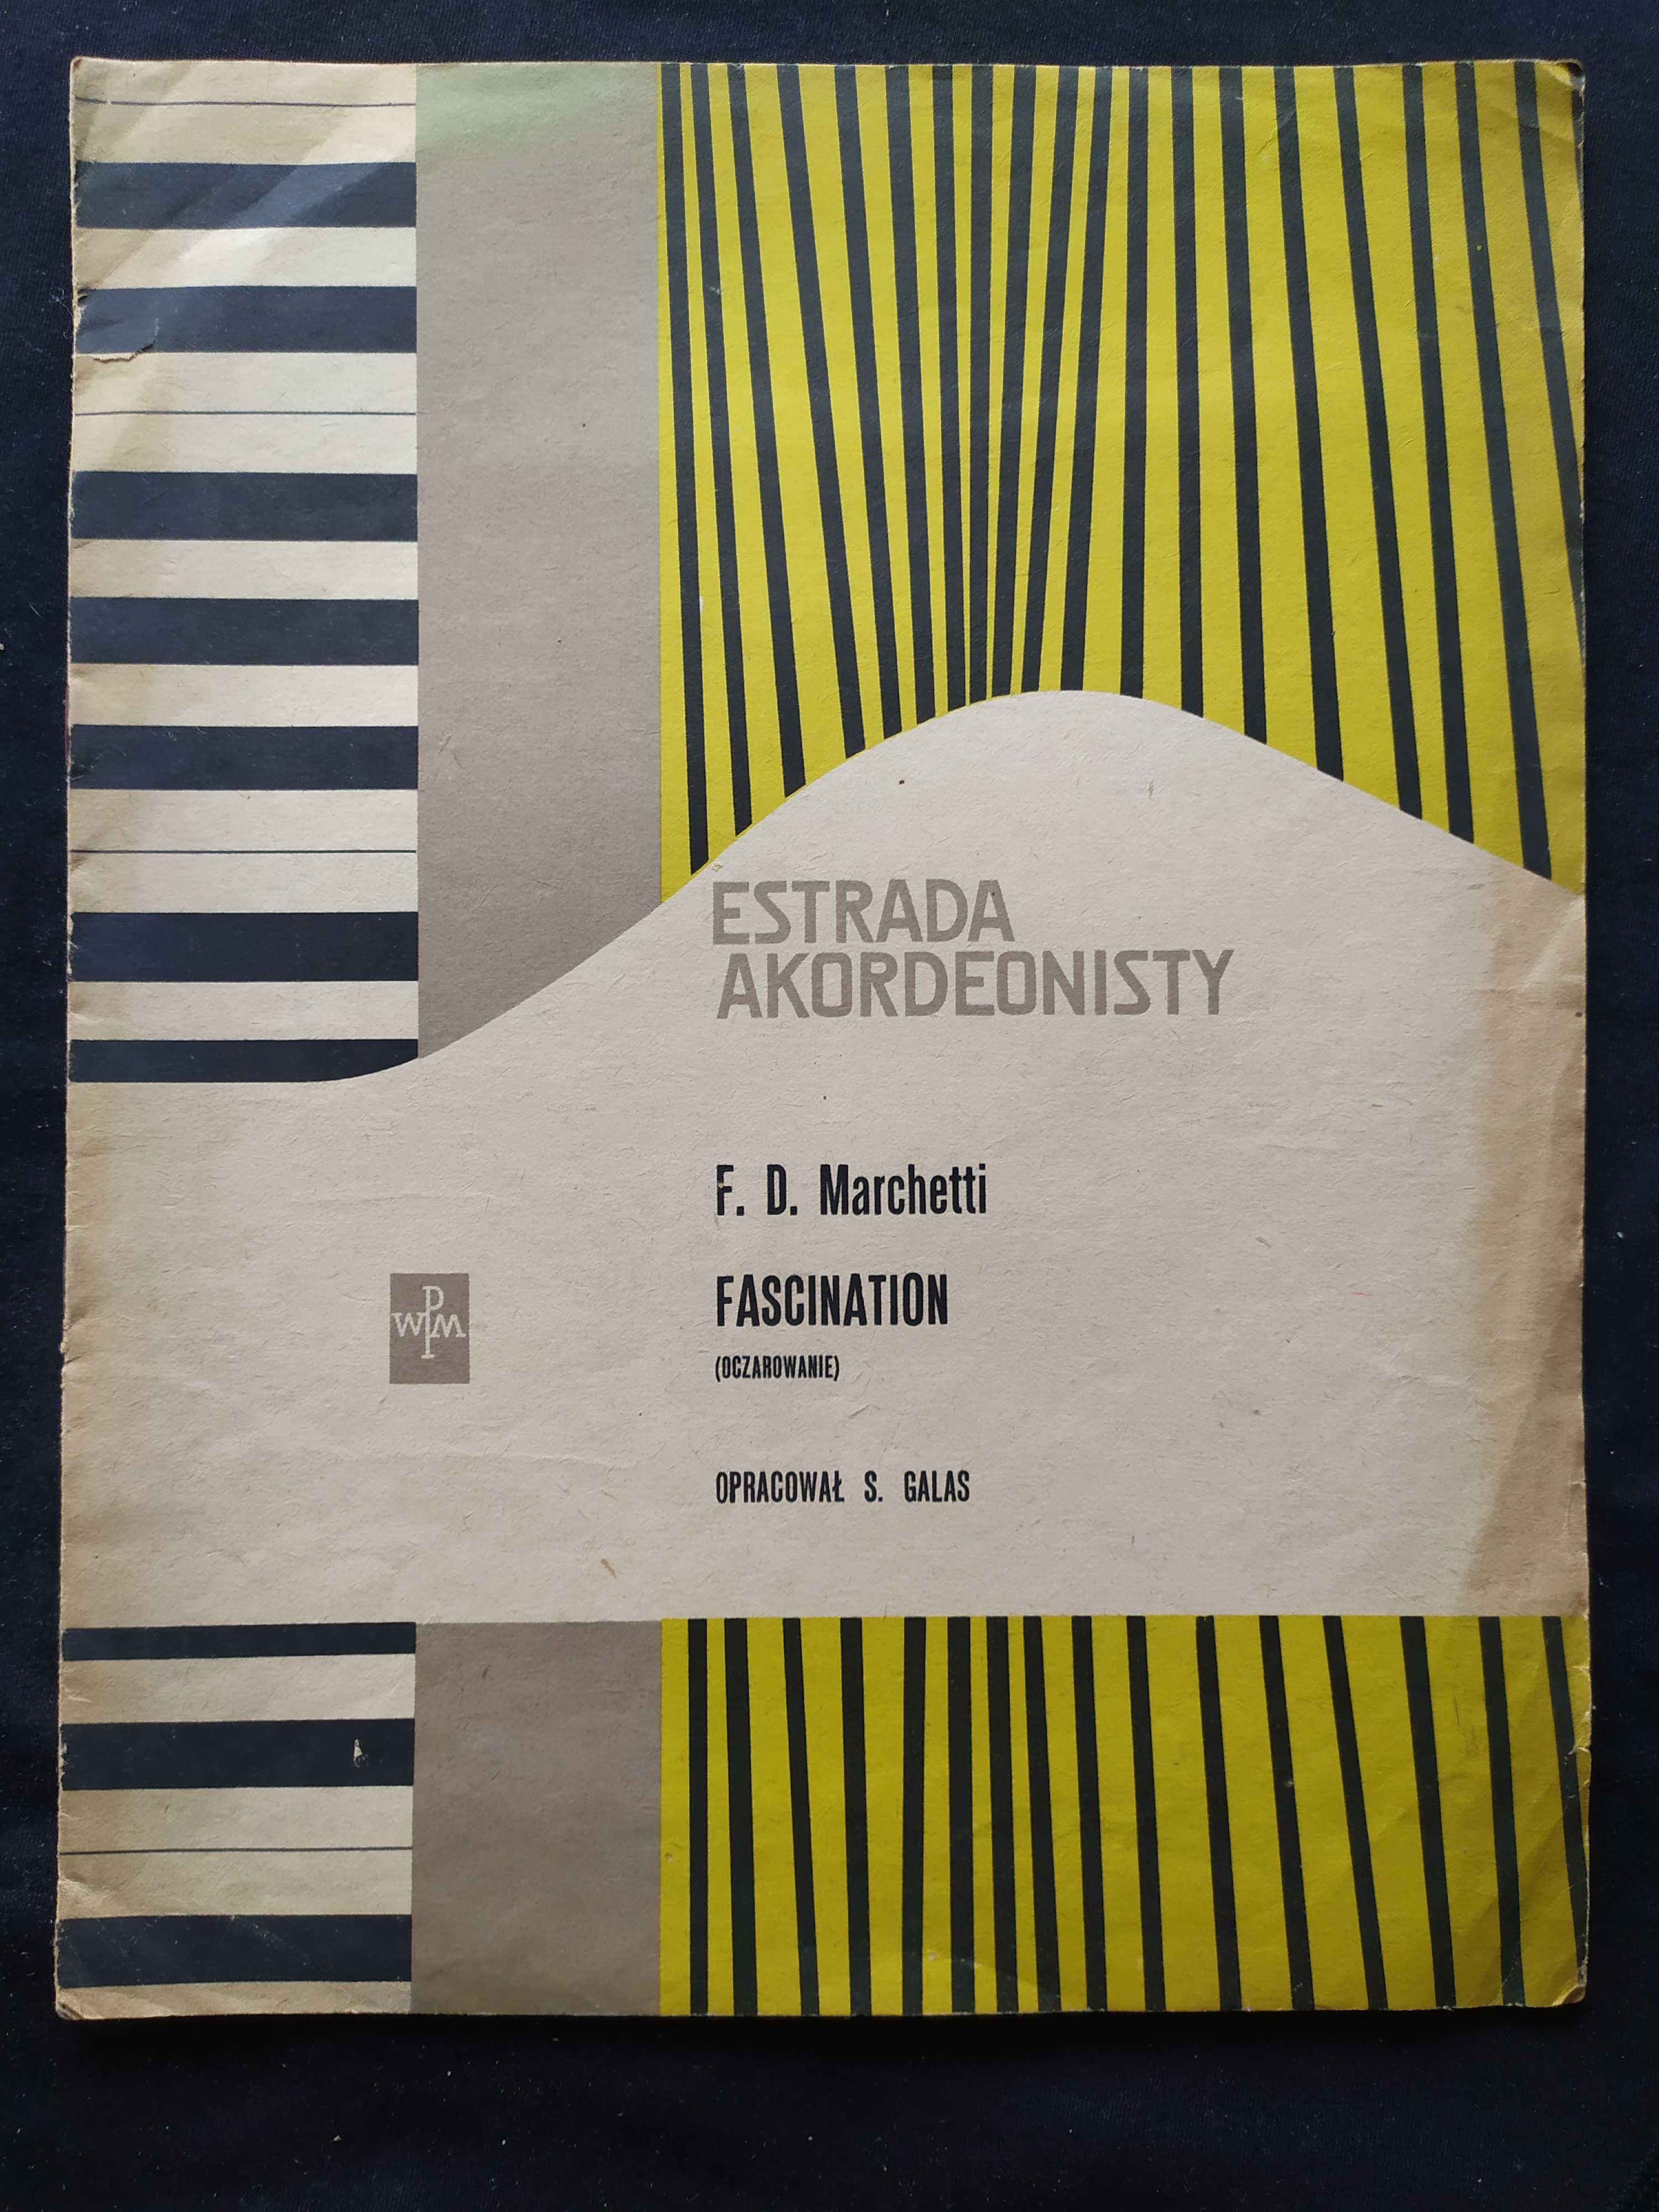 Estrada akordeonisty,Marchetti, 
Fascination. Galas
Kraków 1959